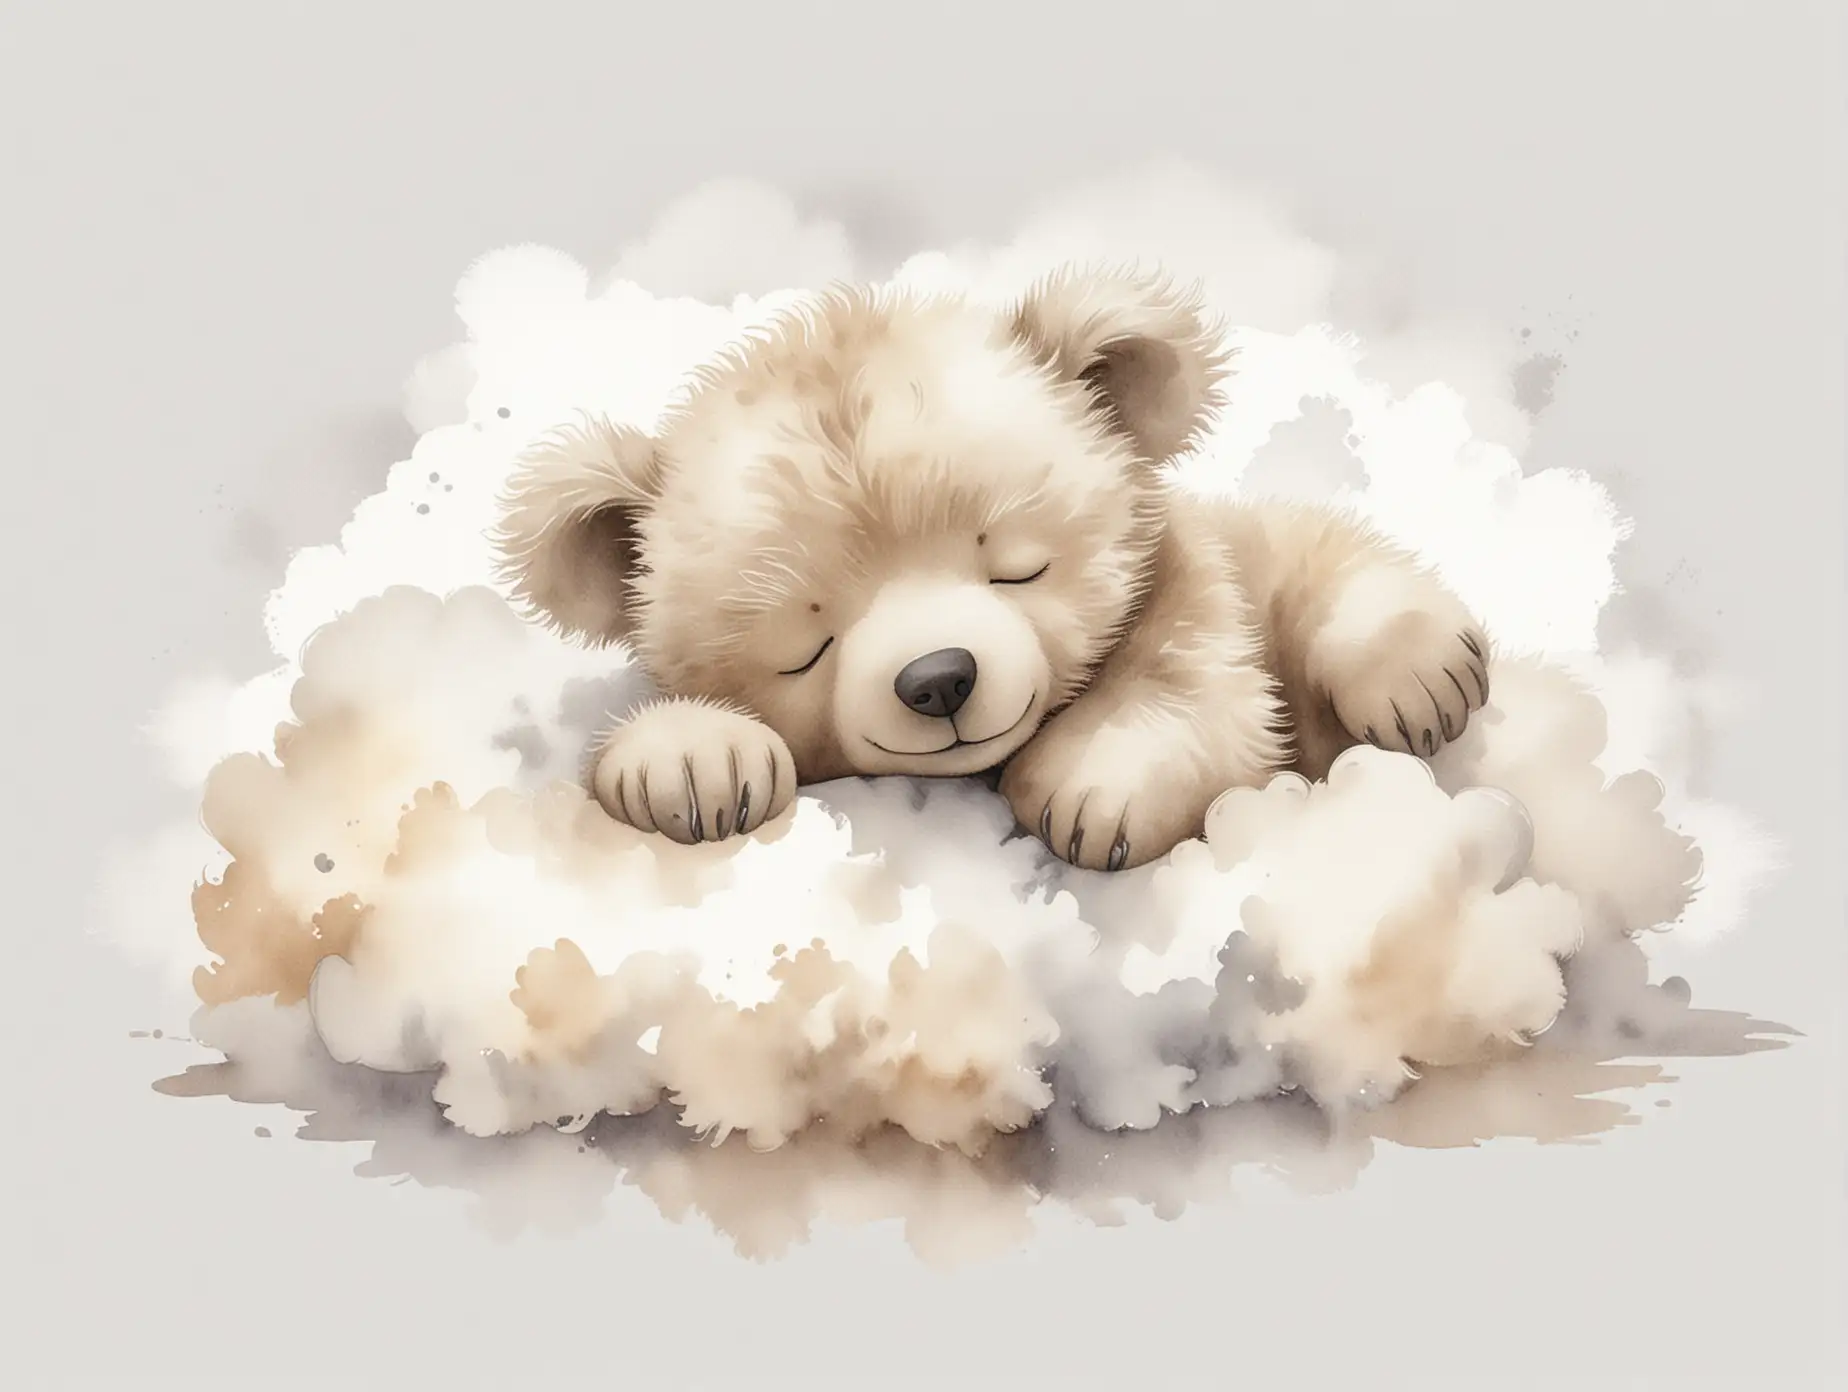 Cute Baby Teddy Bear Asleep on Fluffy Cloud in Muted Tones